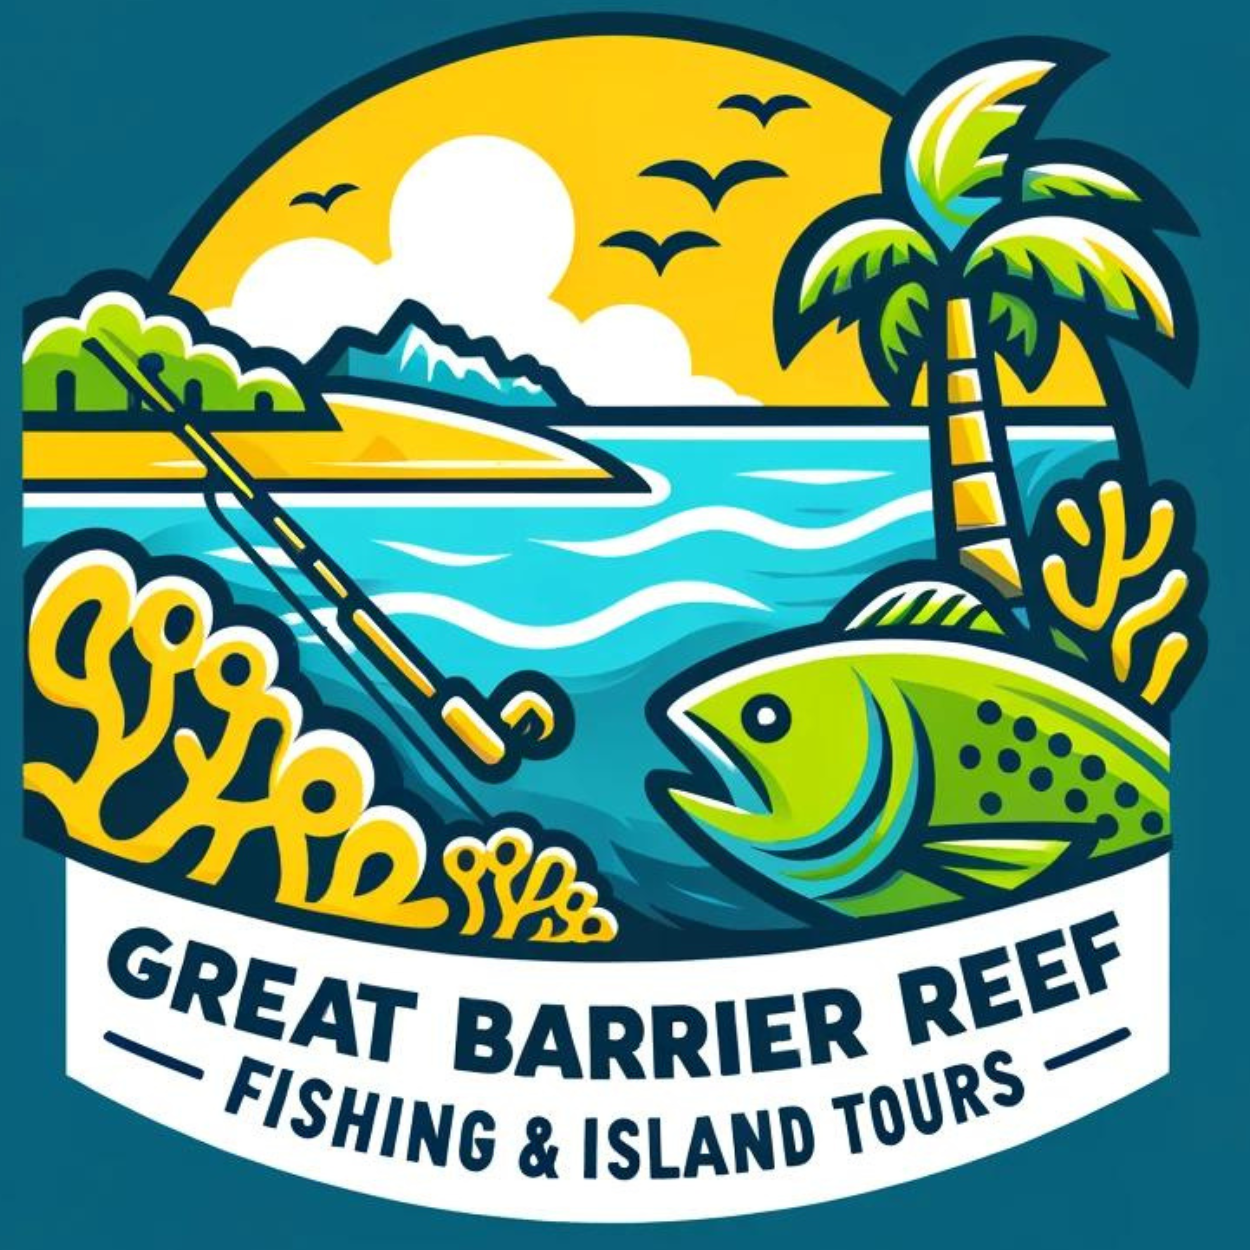 Dunk Island - Great Barrier Reef